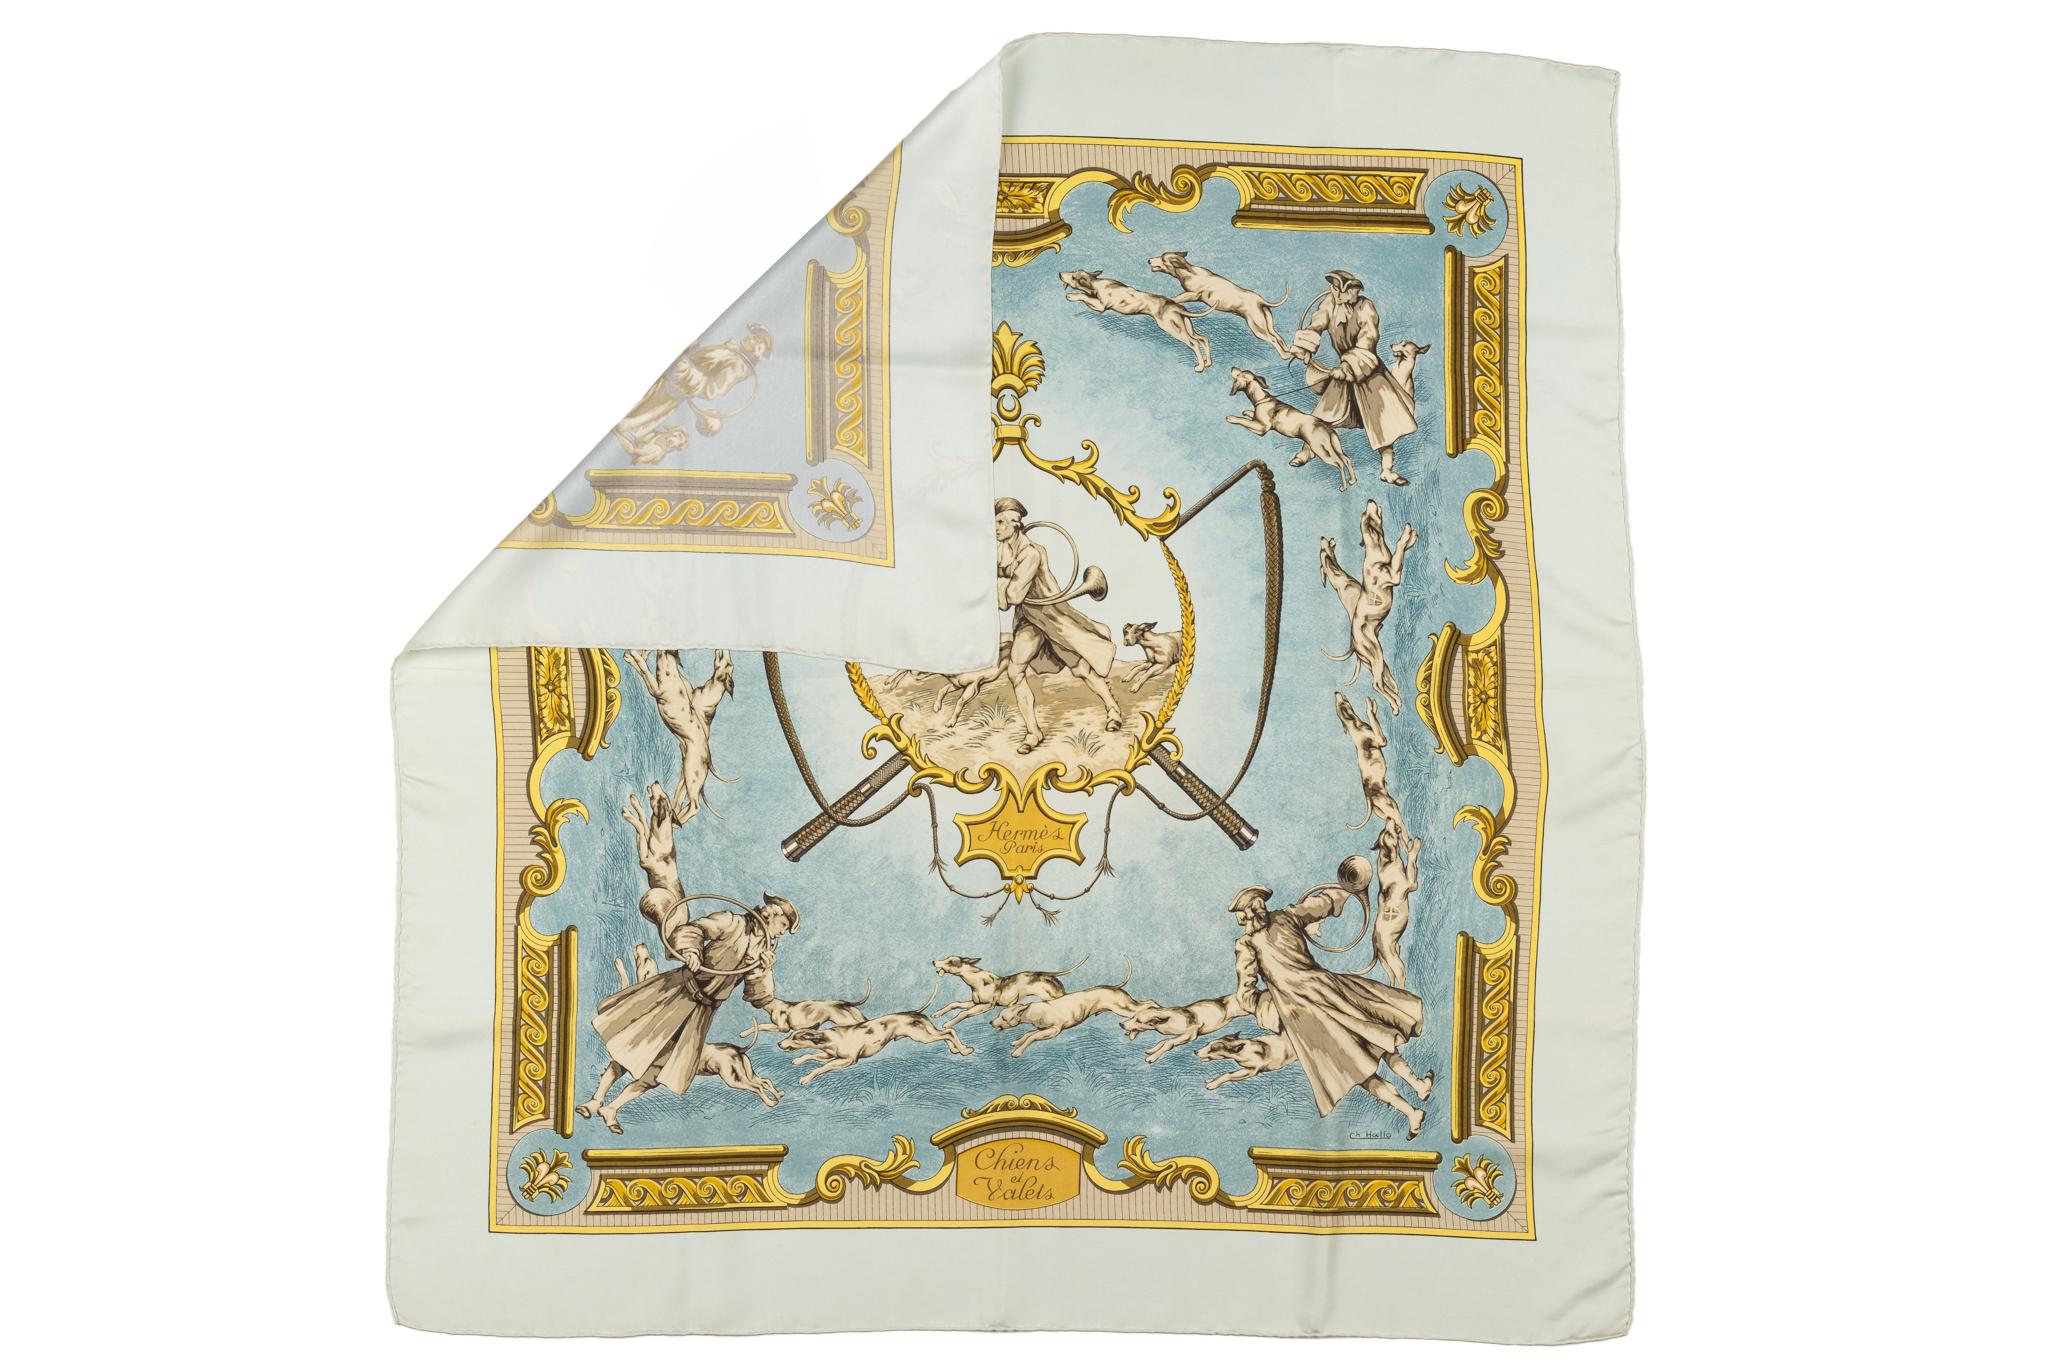 Hermès vintage celeste silk scarf with hunting dogs scene. Gold baroque trim design. Hand rolled edges. No label, no box.